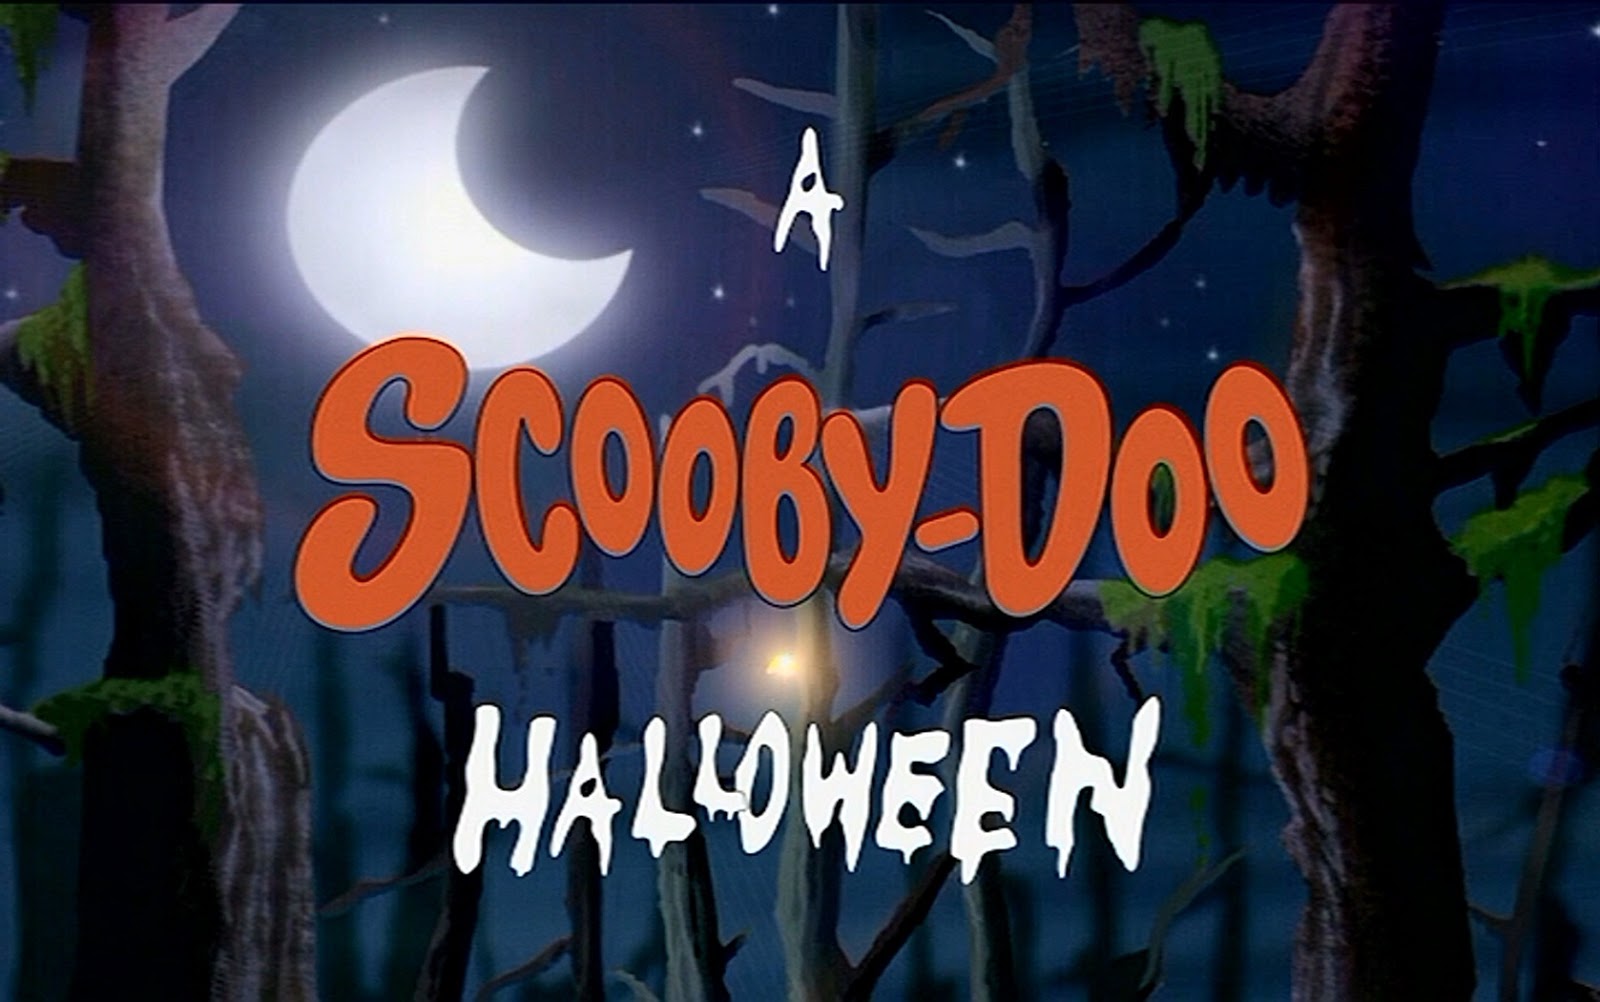 Scooby+Doo+Halloween+title+card.jpg